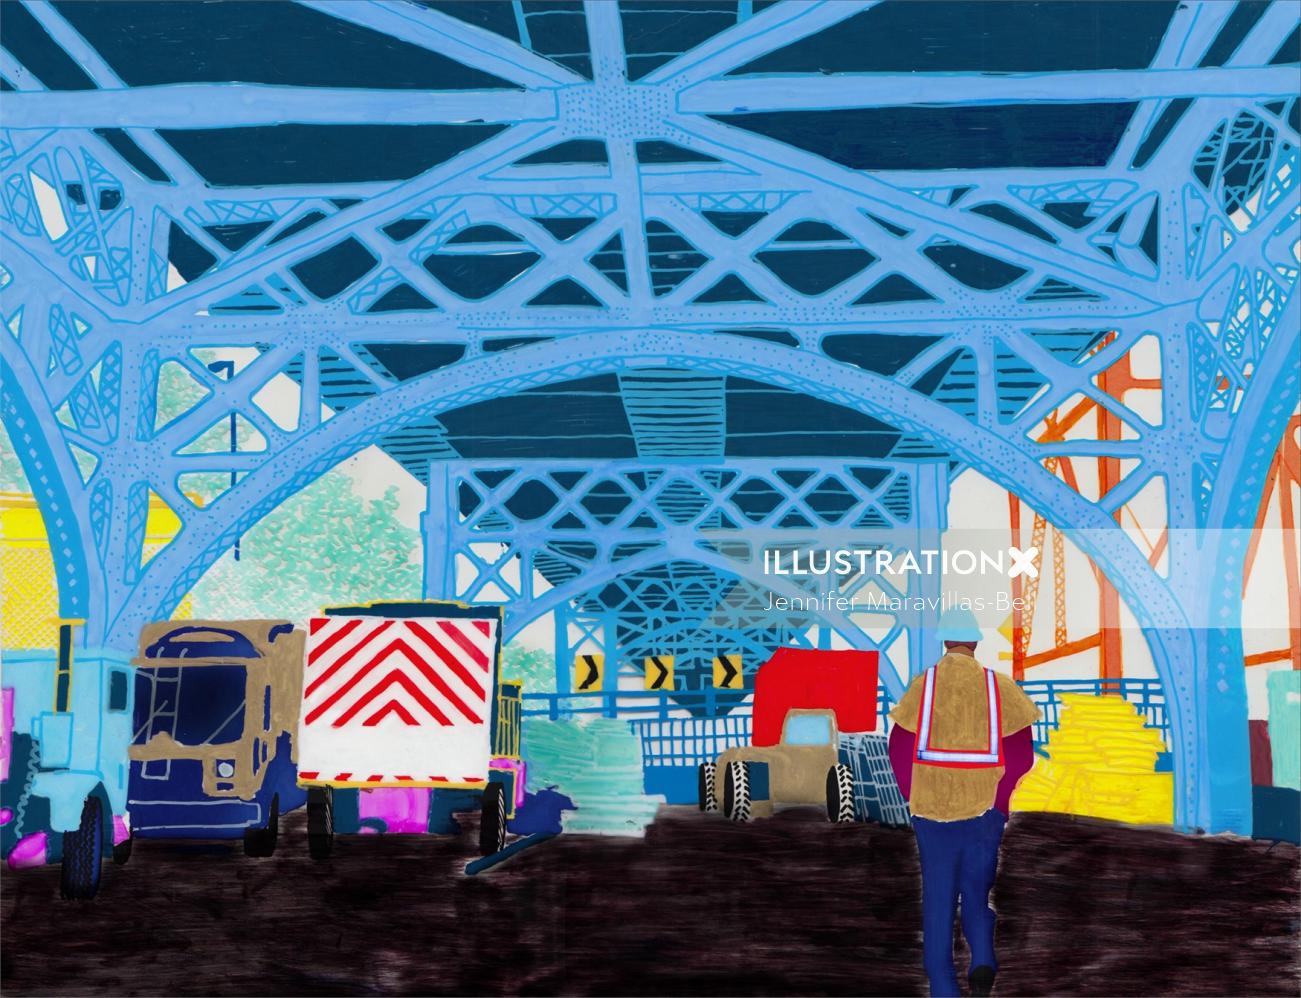 An illustration of railway foot over bridge